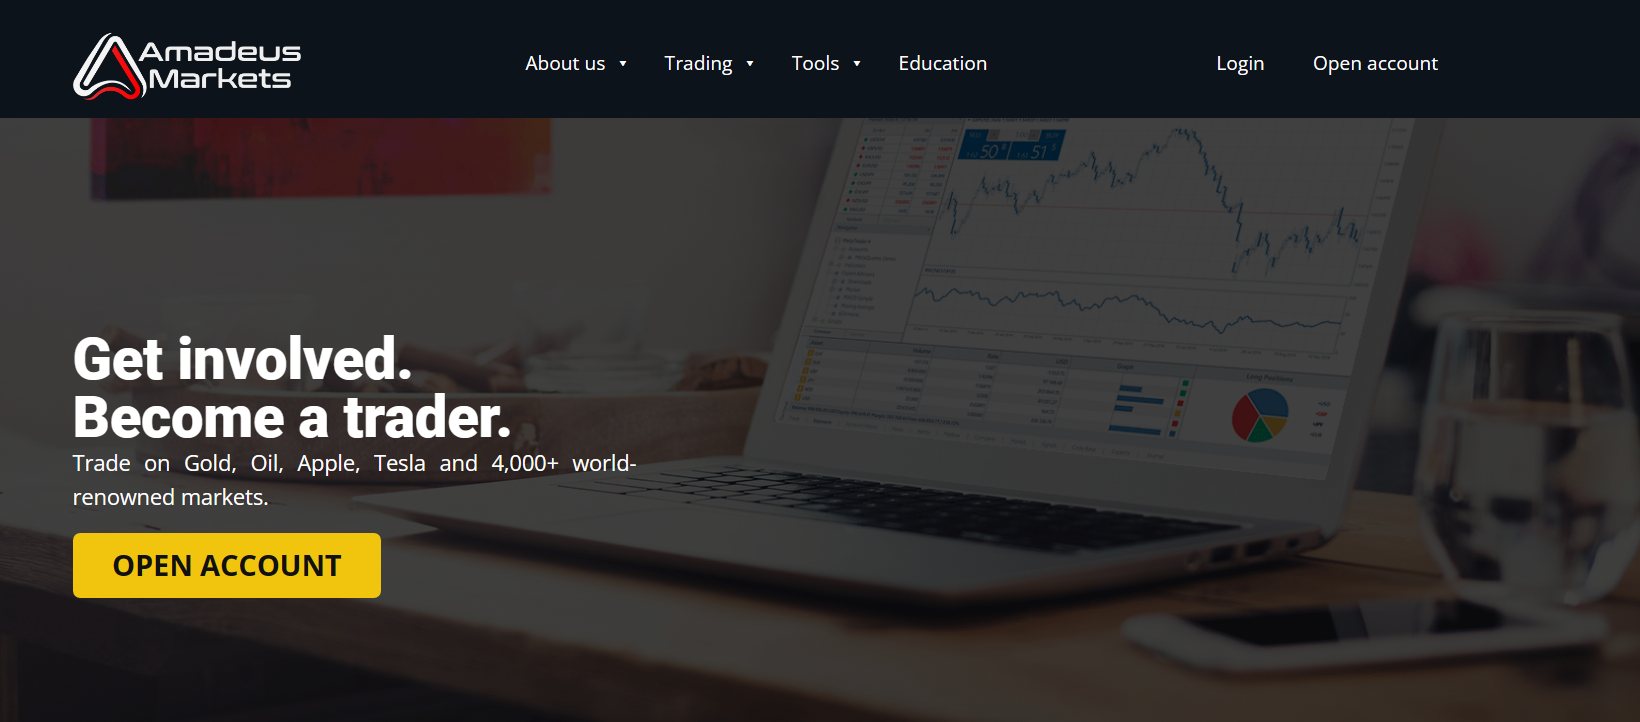 Homepage of Amadeus Markets 